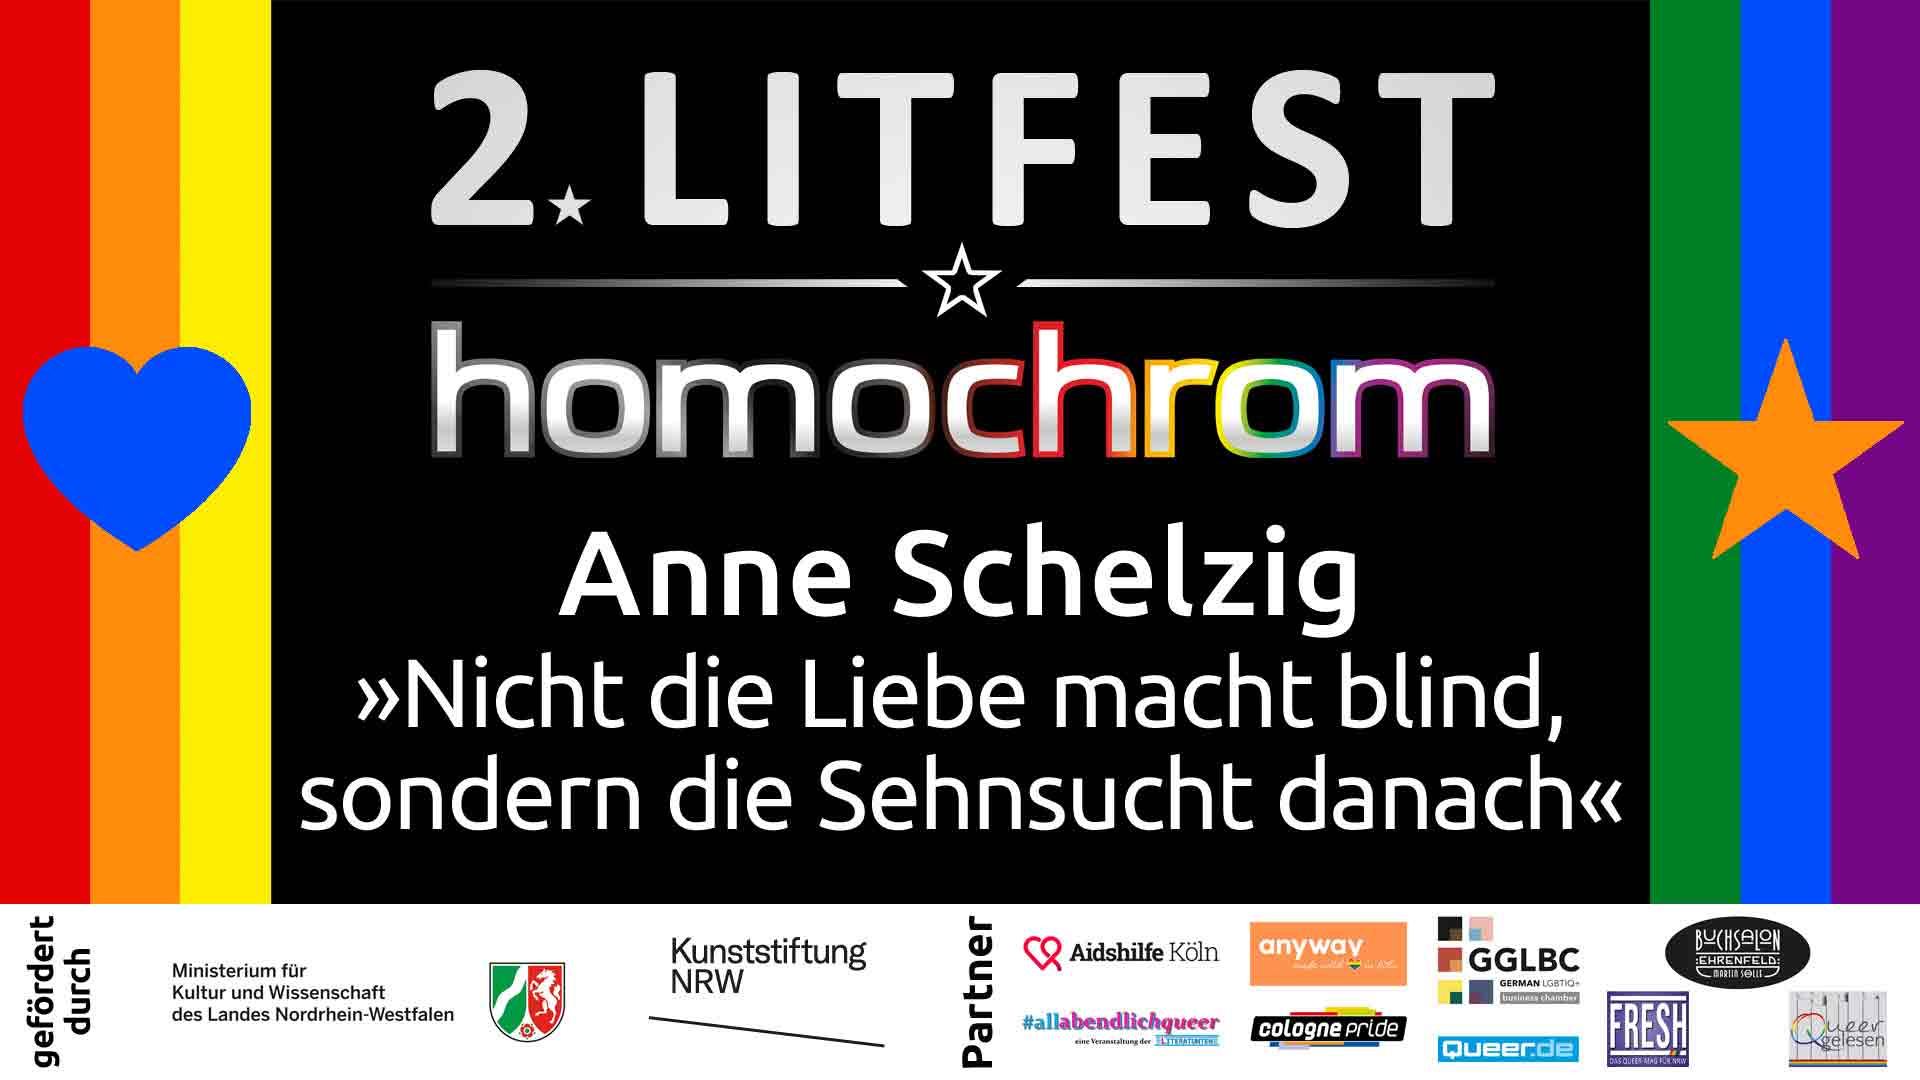  Youtube Video, Anne Schelzig, 2. Litfest homochrom